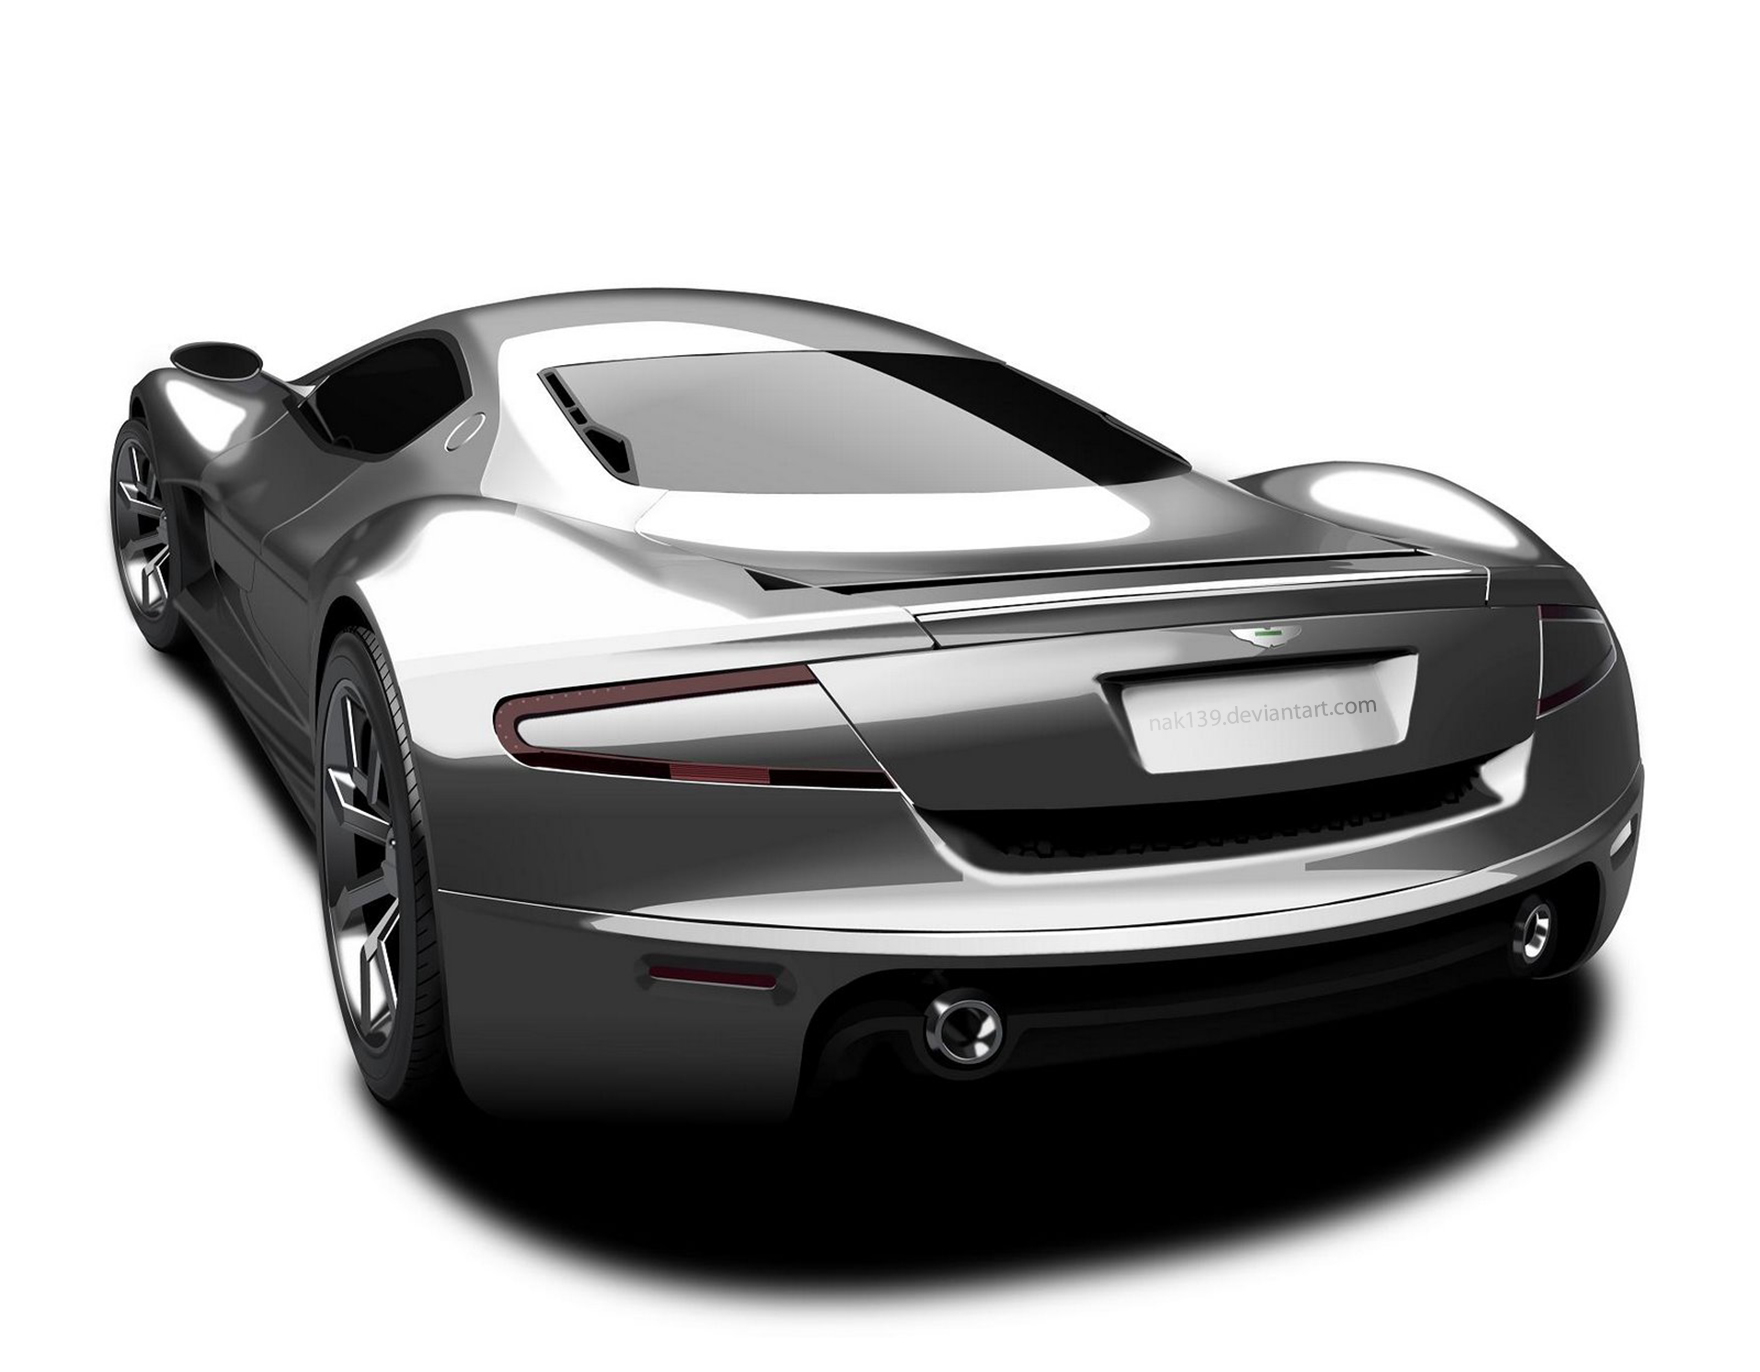 Aston Martin DB9 vector by pa